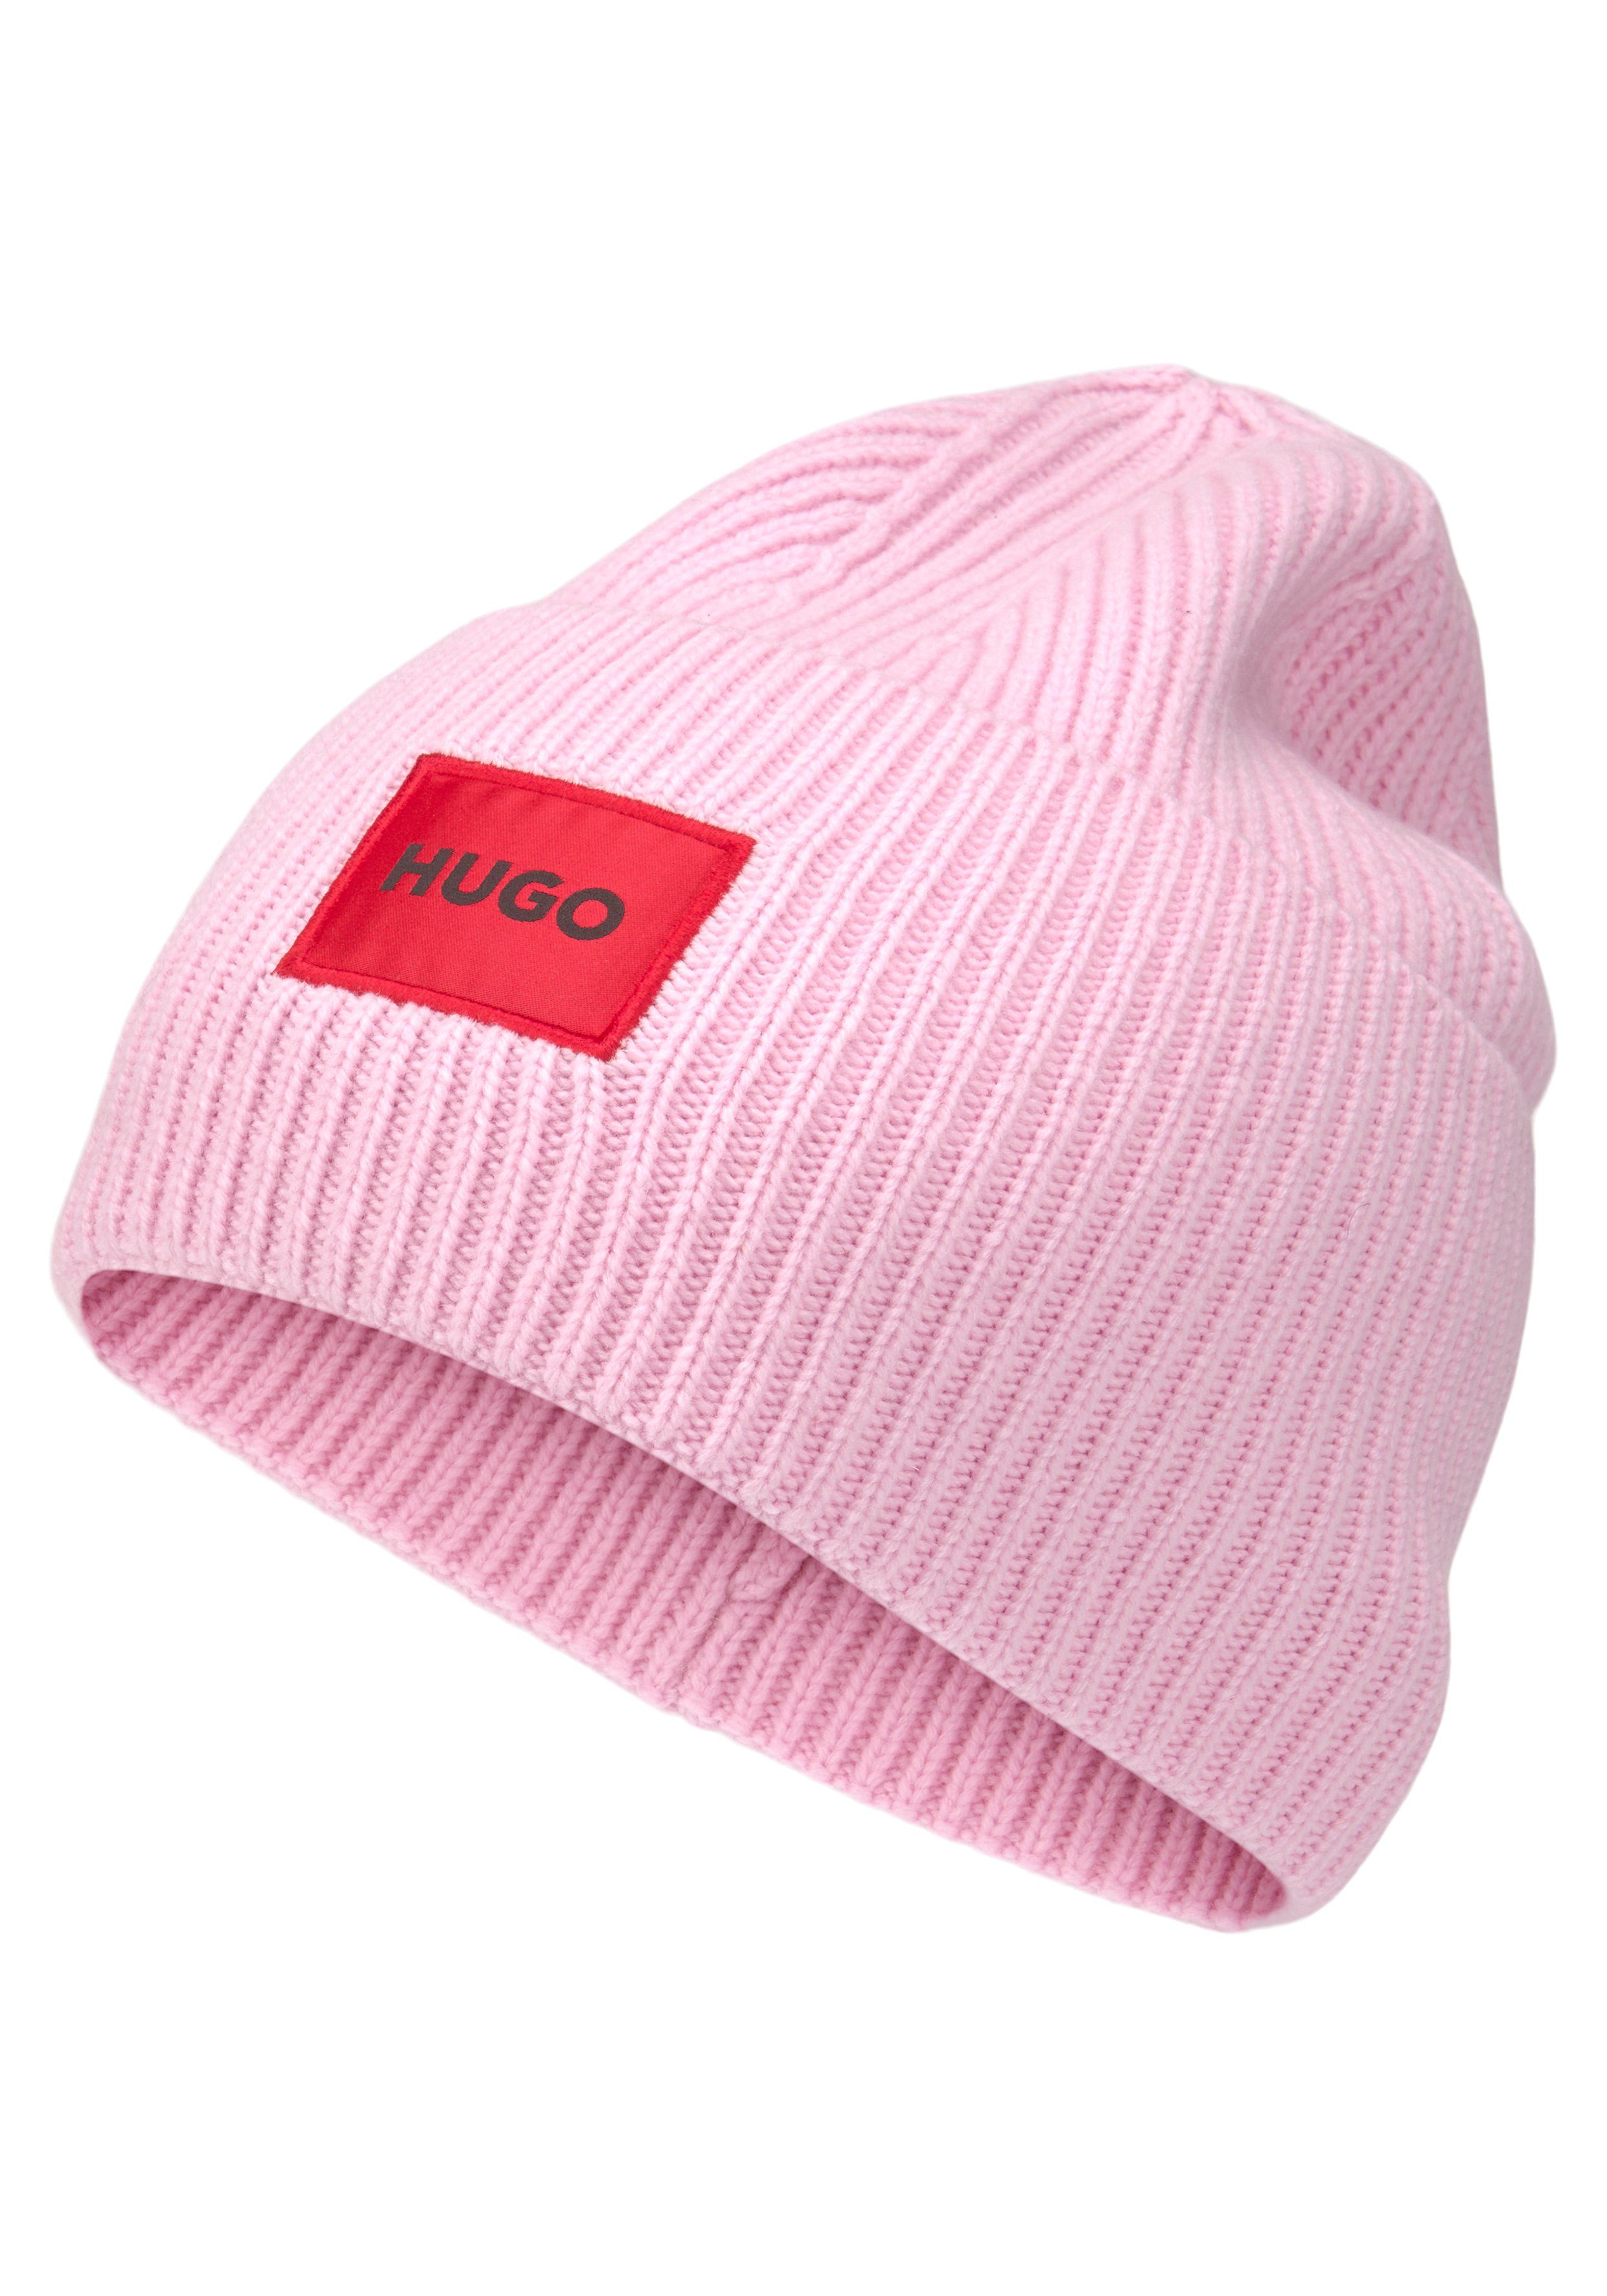 HUGO Beanie Saffa hat 10253885 0 mit rotem HUGO Logo pink